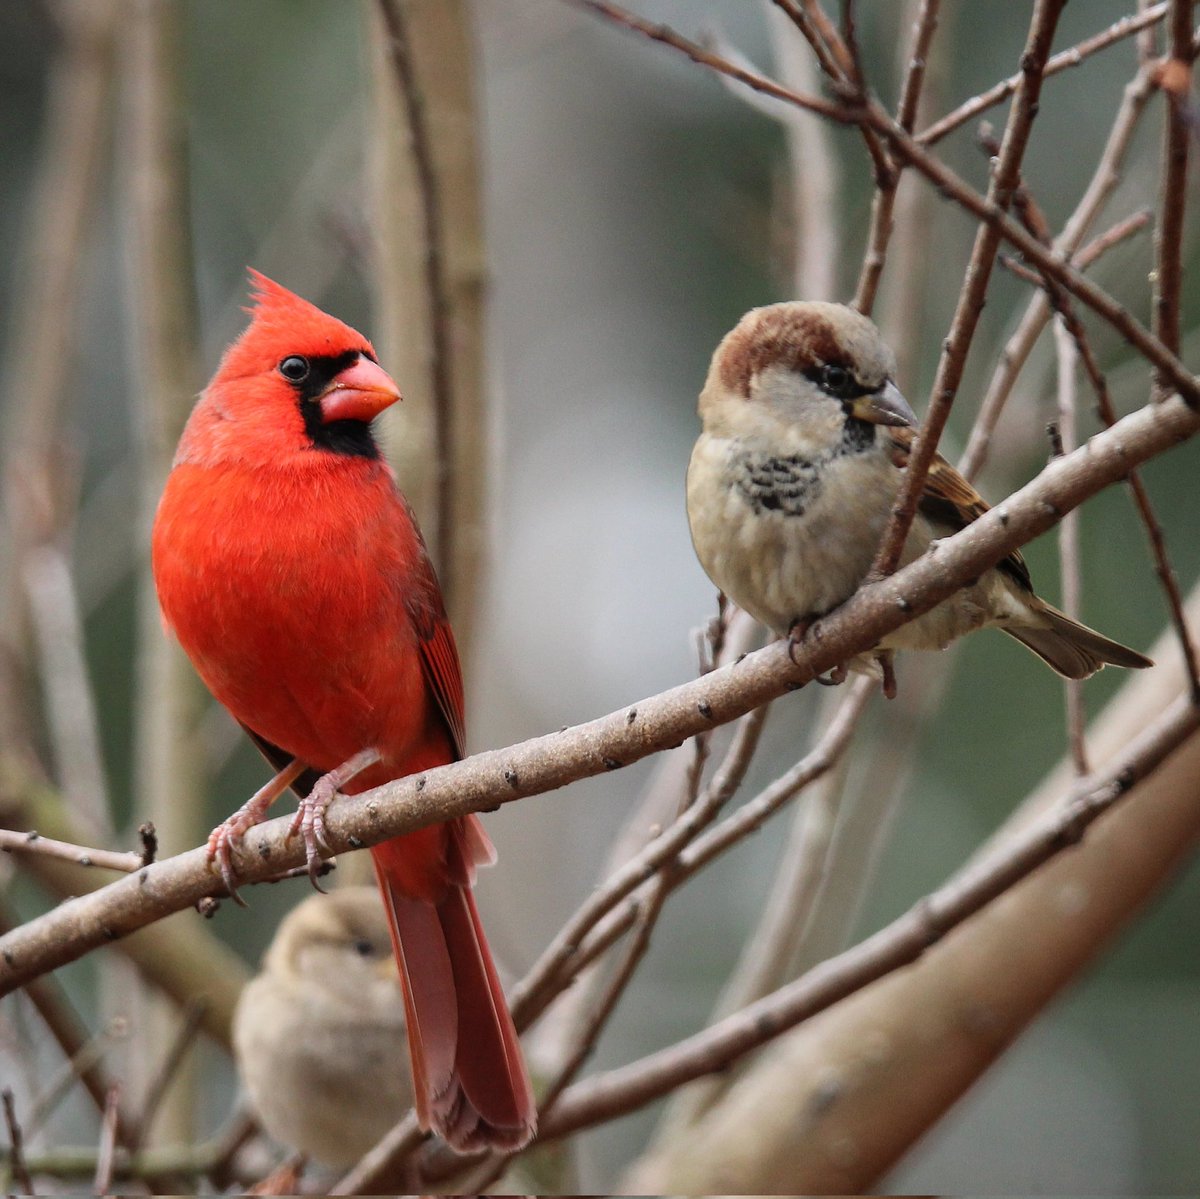 I'm not sure Mr. Cardinal wanted to share his branch, but he did!
#malecardinals #malecardinal #malehousesparrow #sparrows #sparrow #malehousesparrows #morningbirding #morningvisit #morningroutines #morning #sharing #sharingiscaring